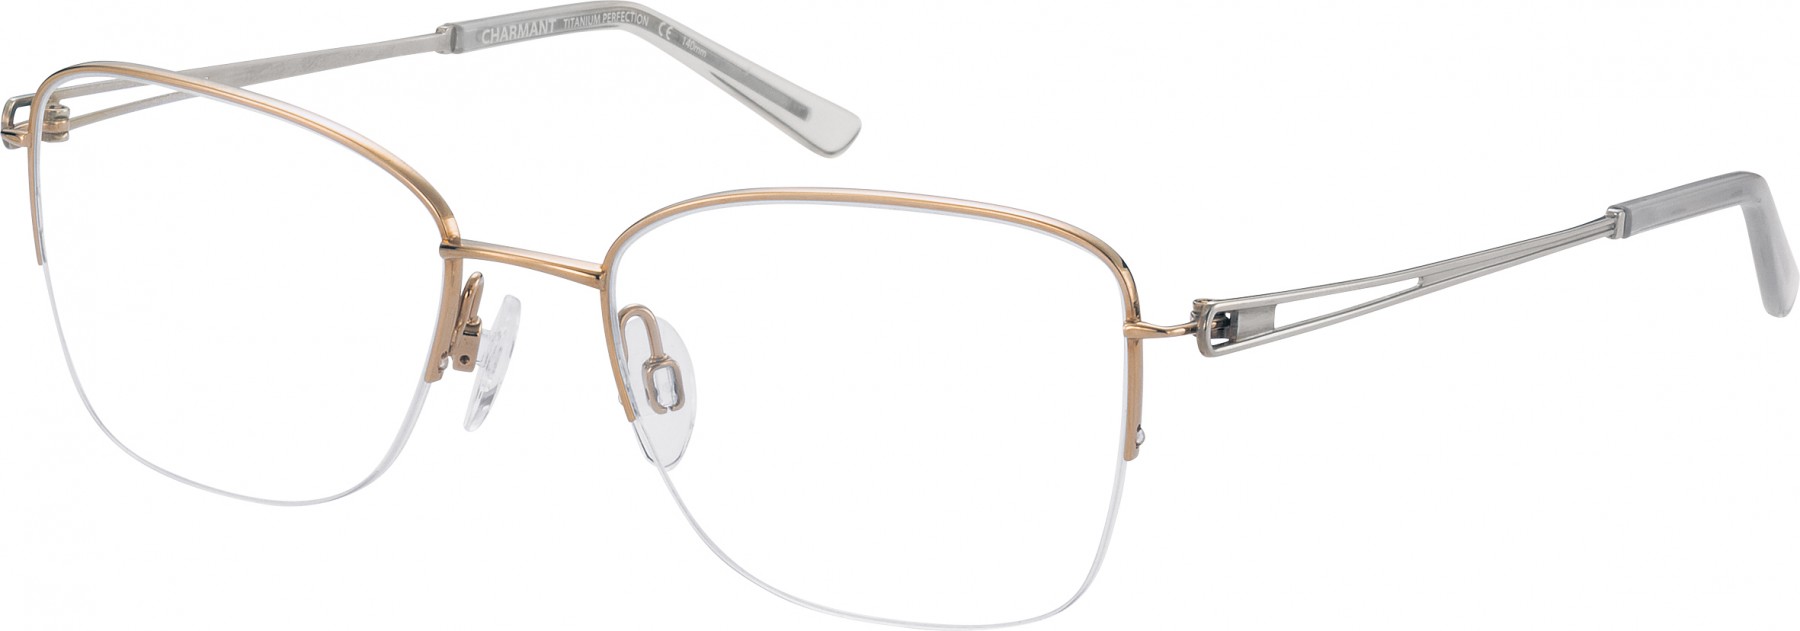 Charmant 29815 GP Titanium Perfection - Oculos de Grau